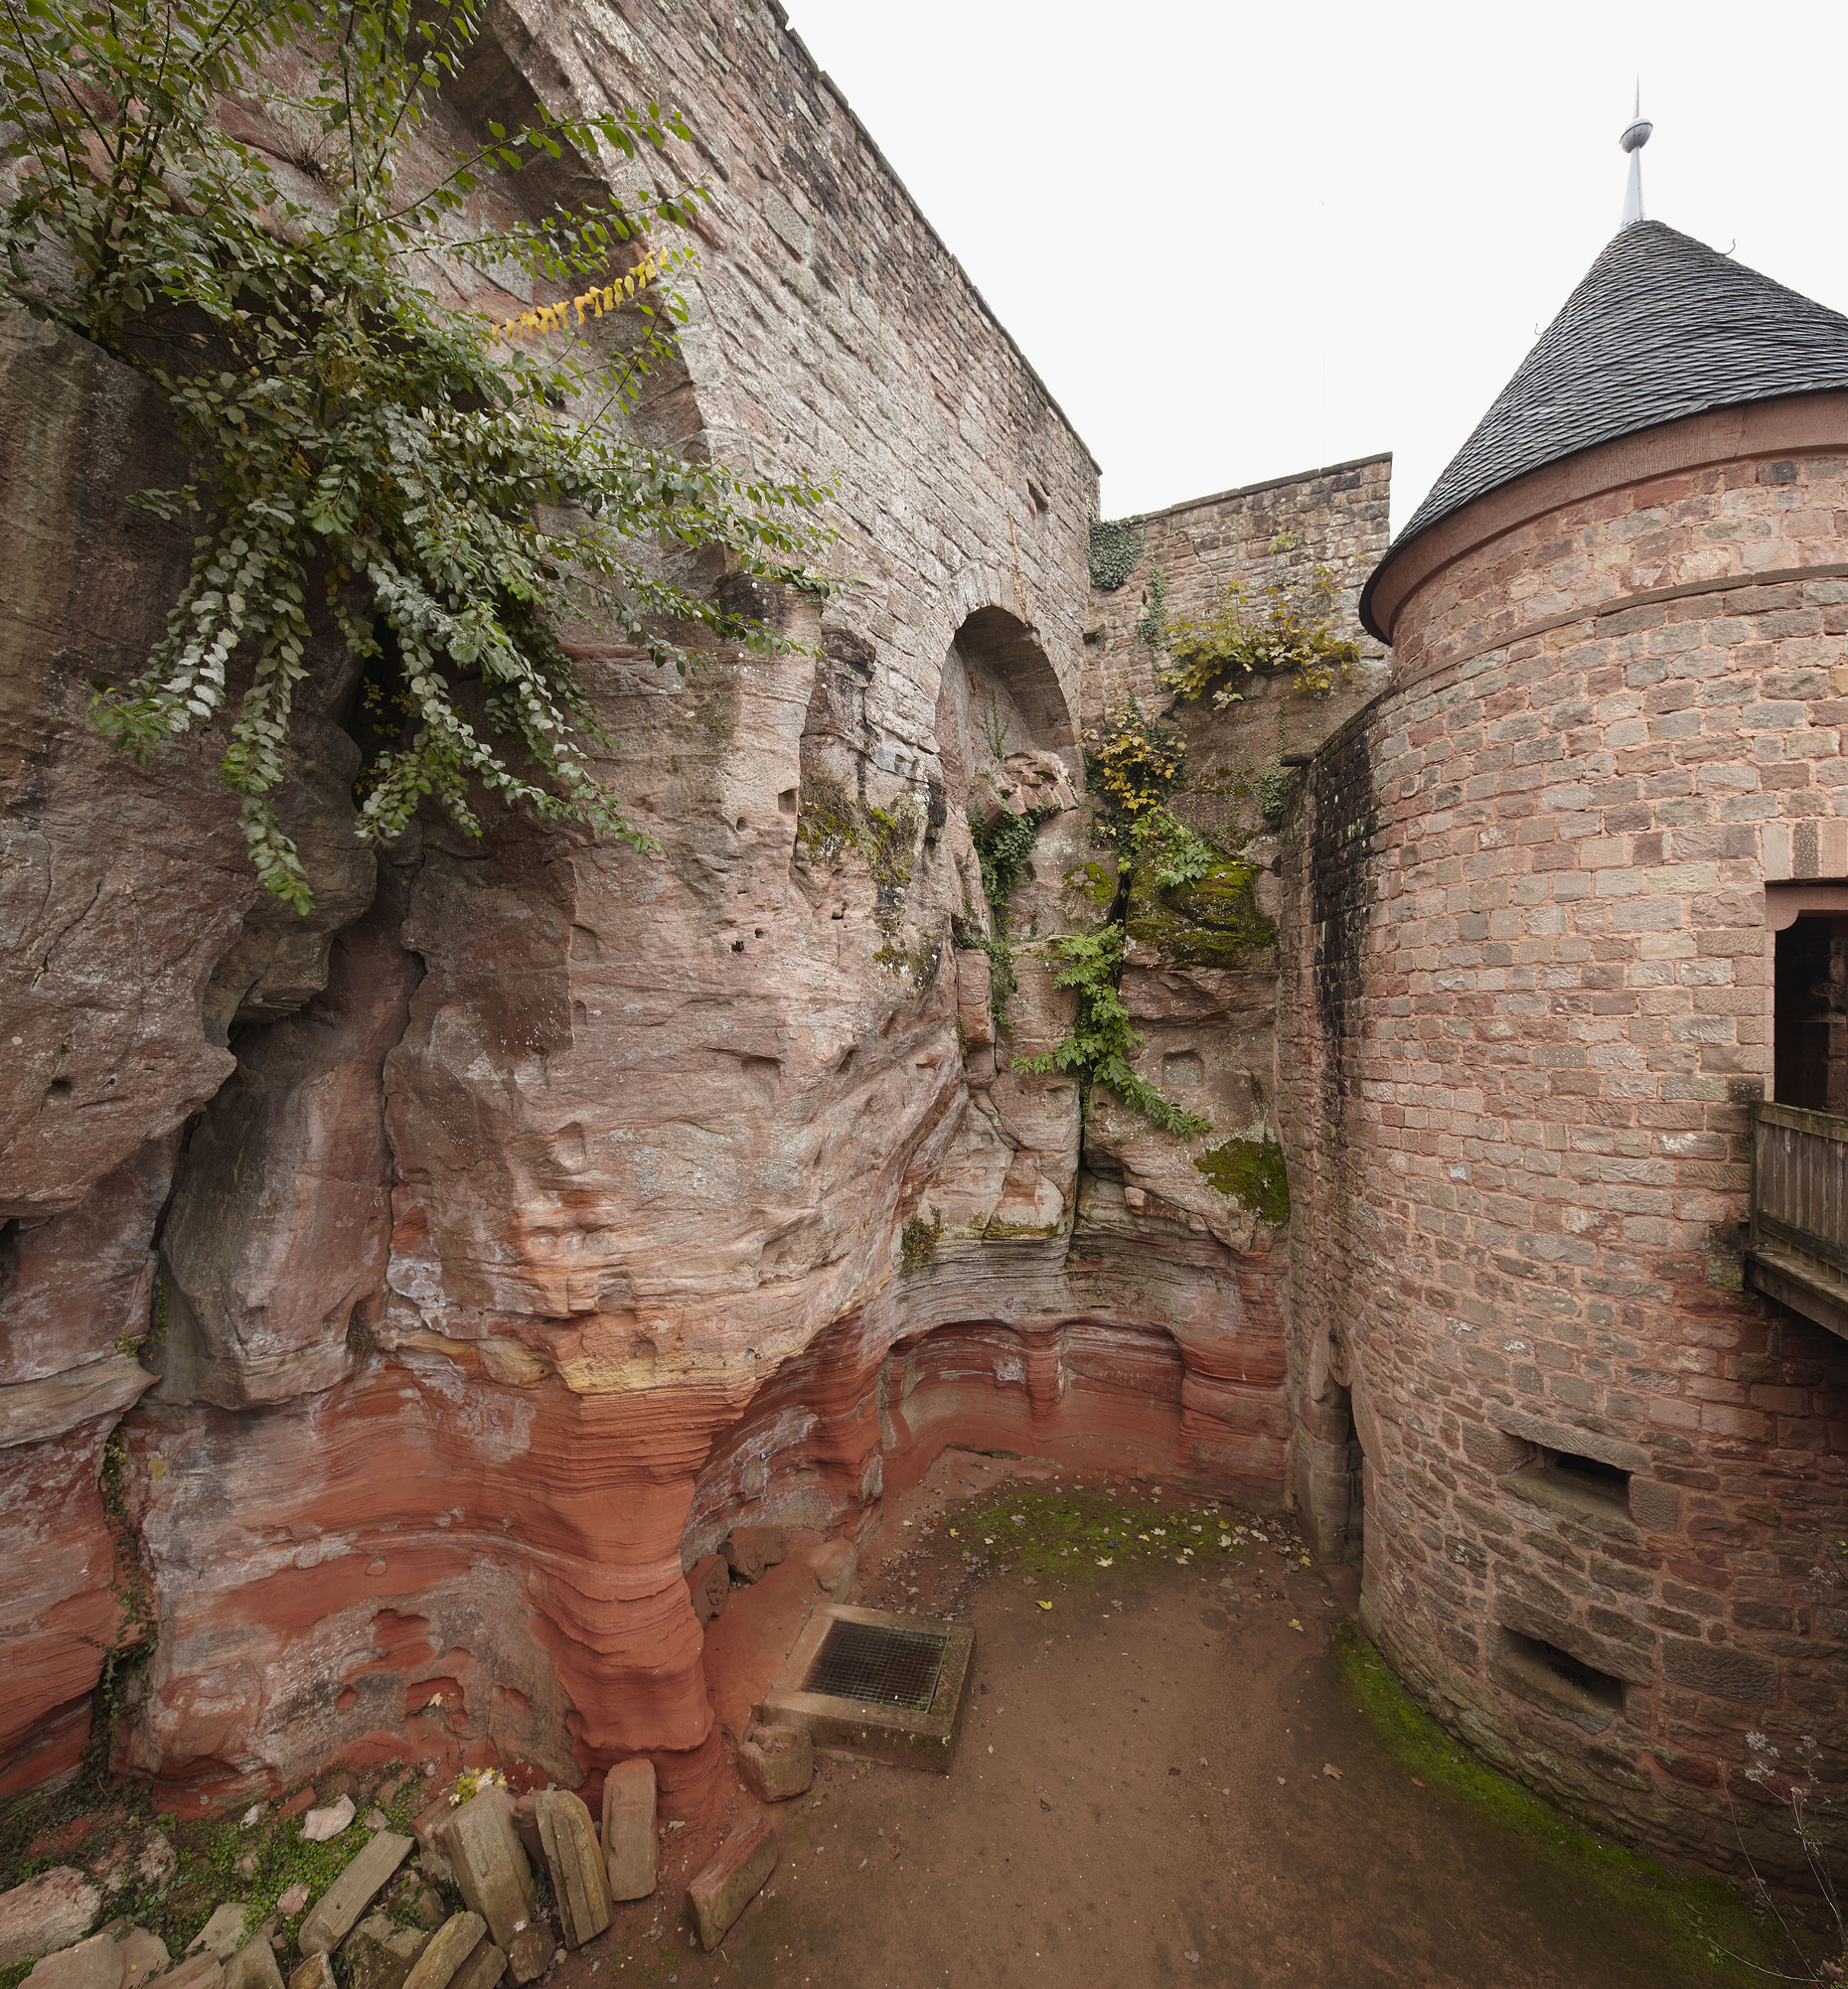 Innenhof, Mauern, Fels, Turm mit Zuweg